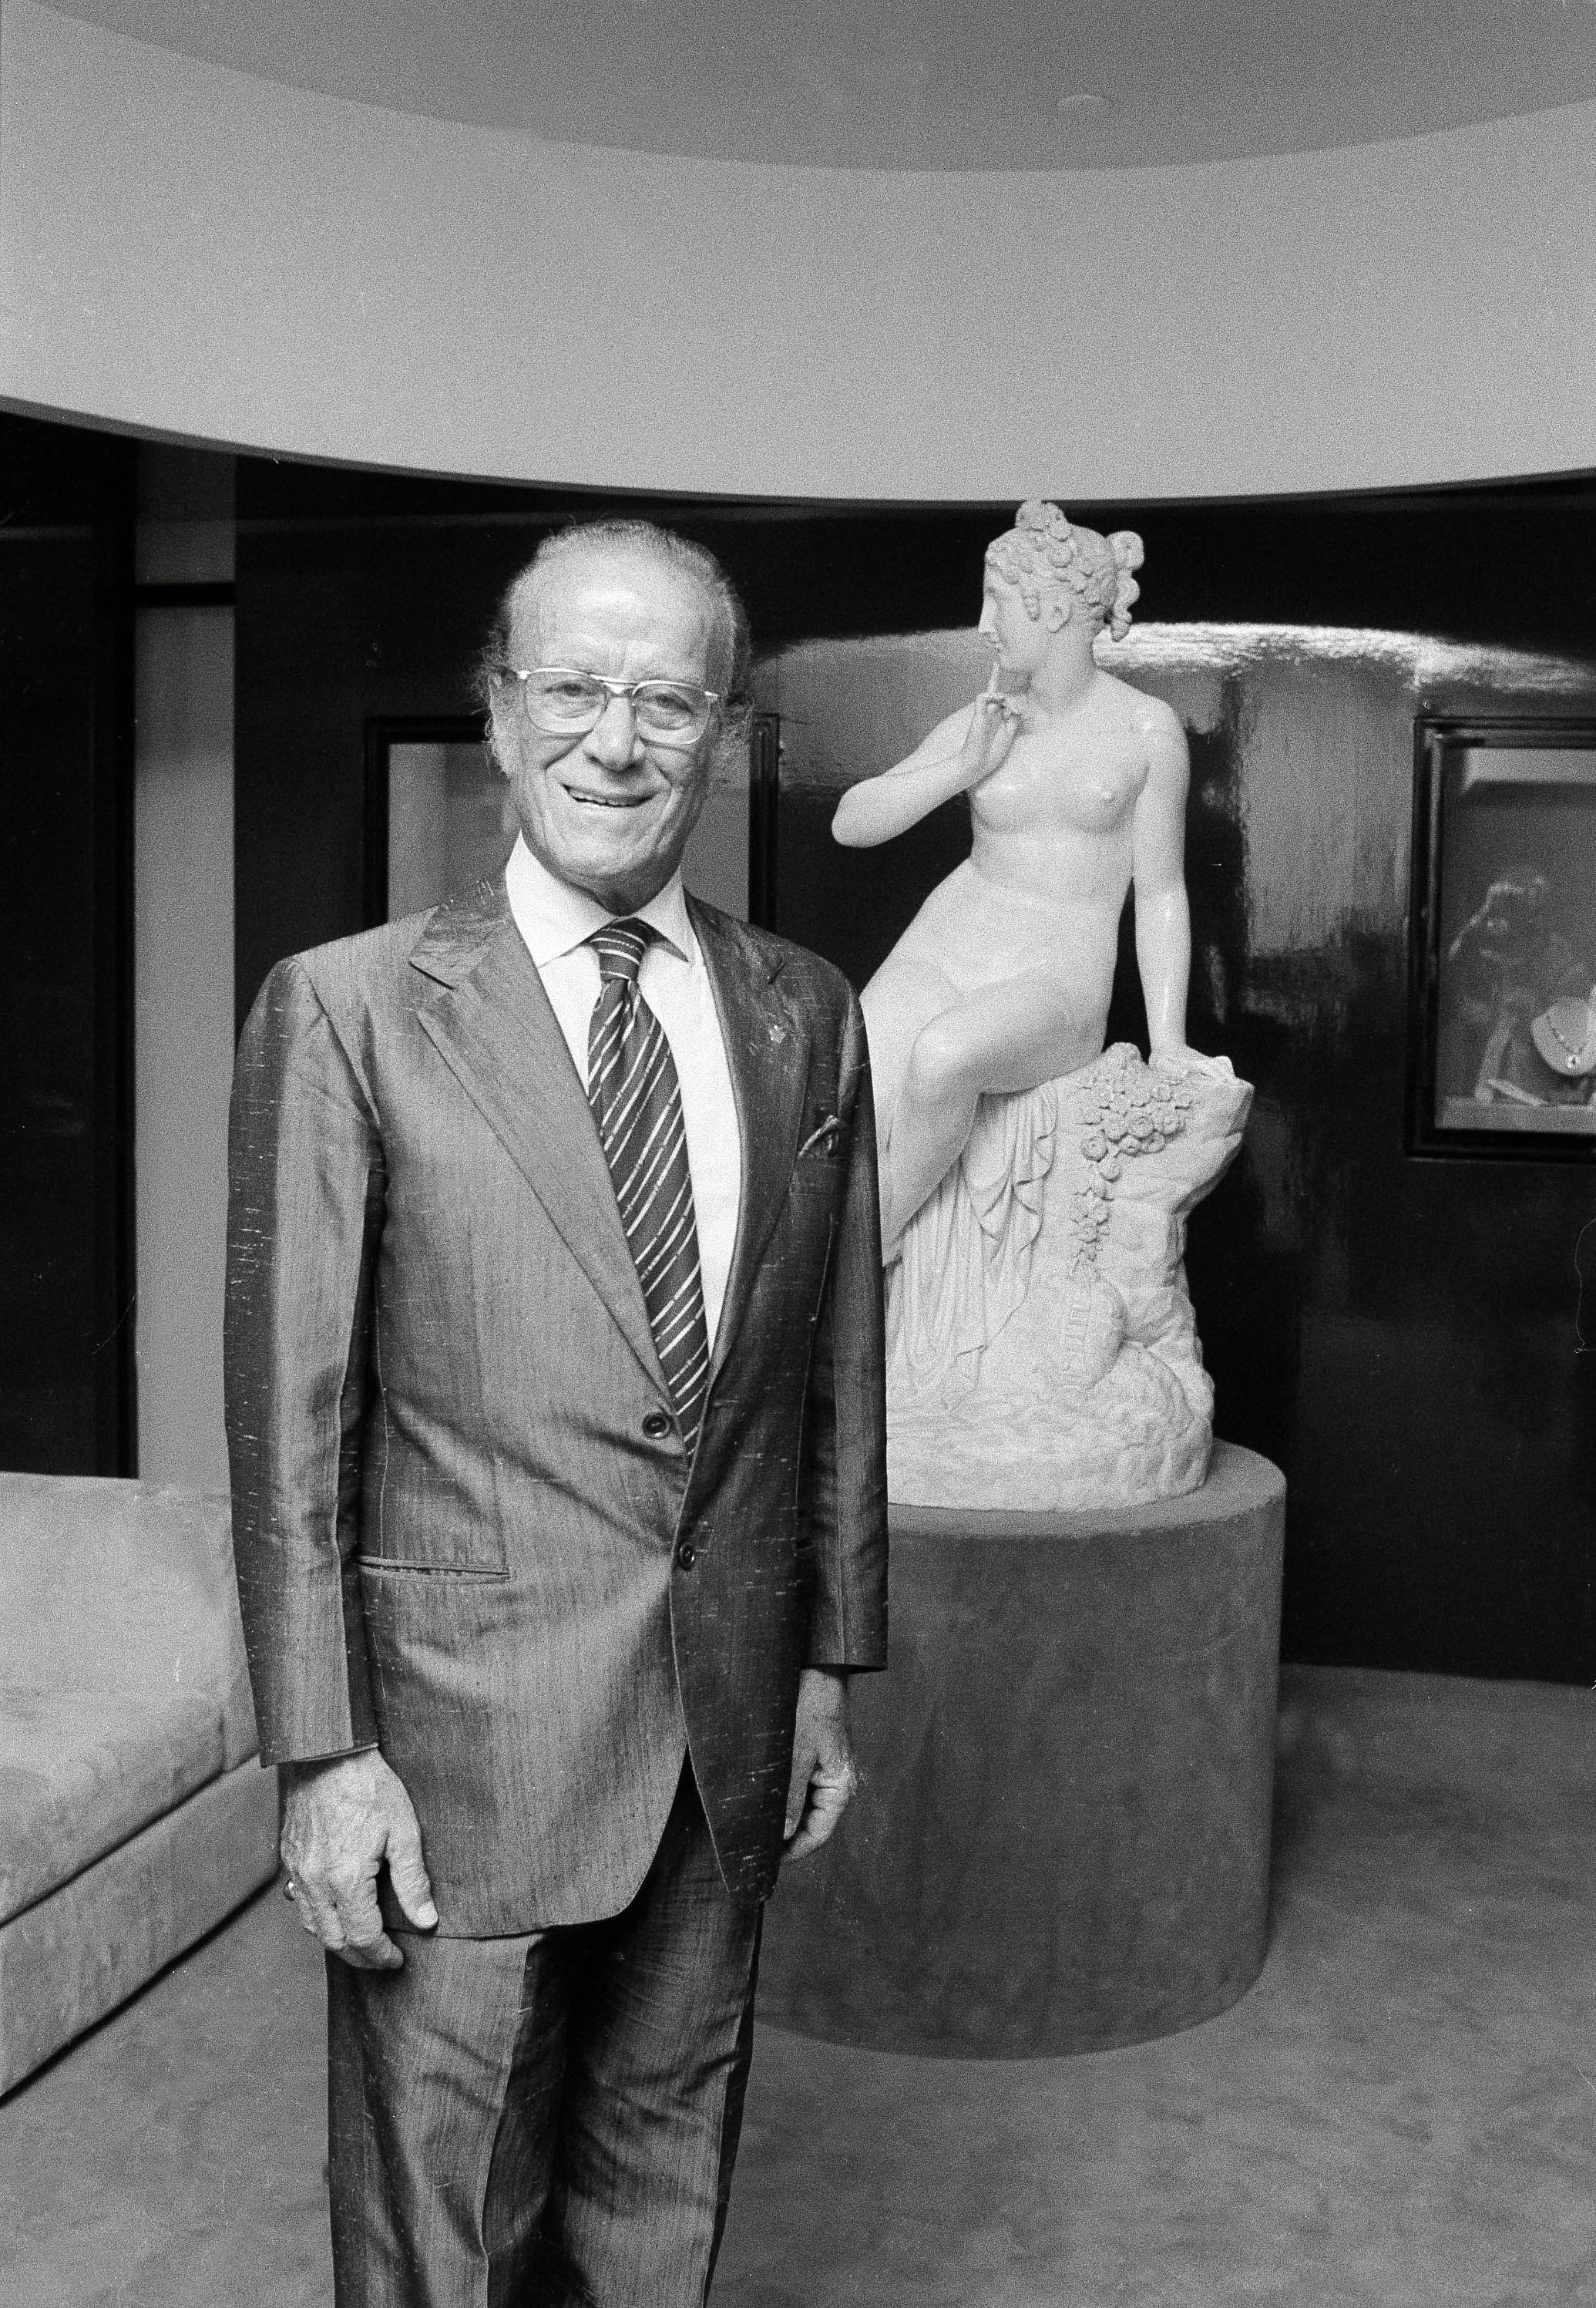 Aldo Gucci standing in front a statue